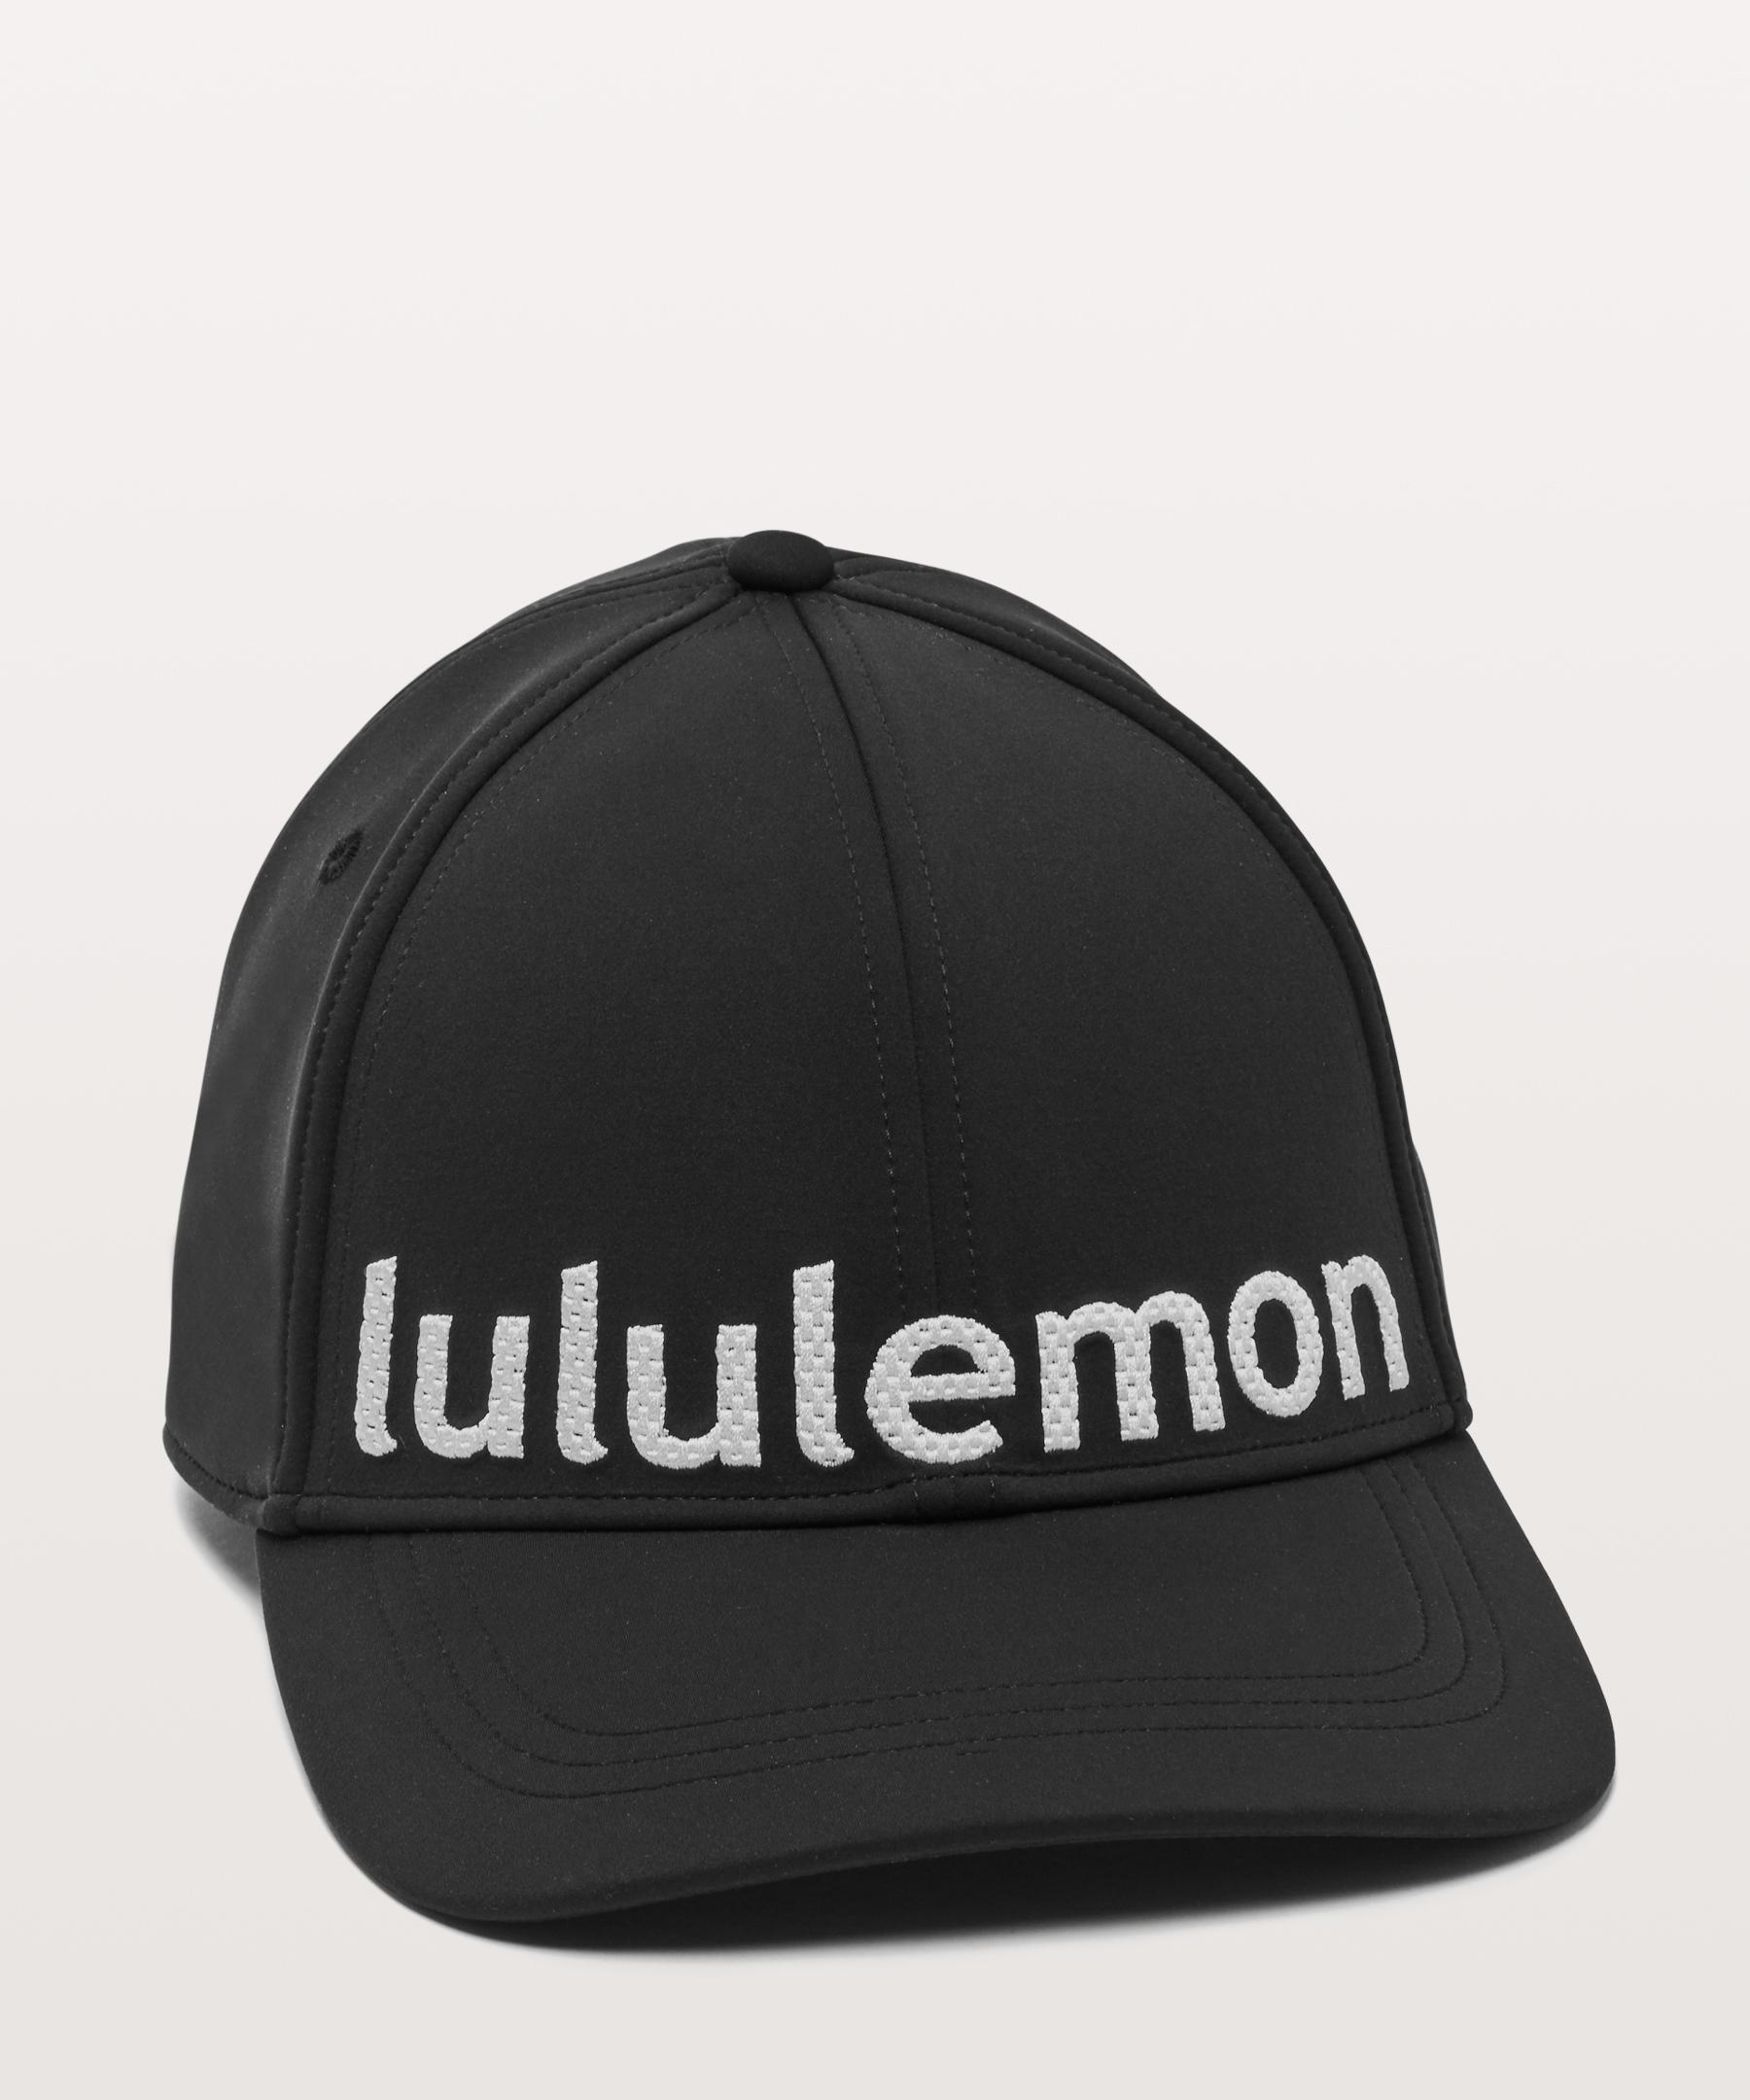 lululemon logo hat